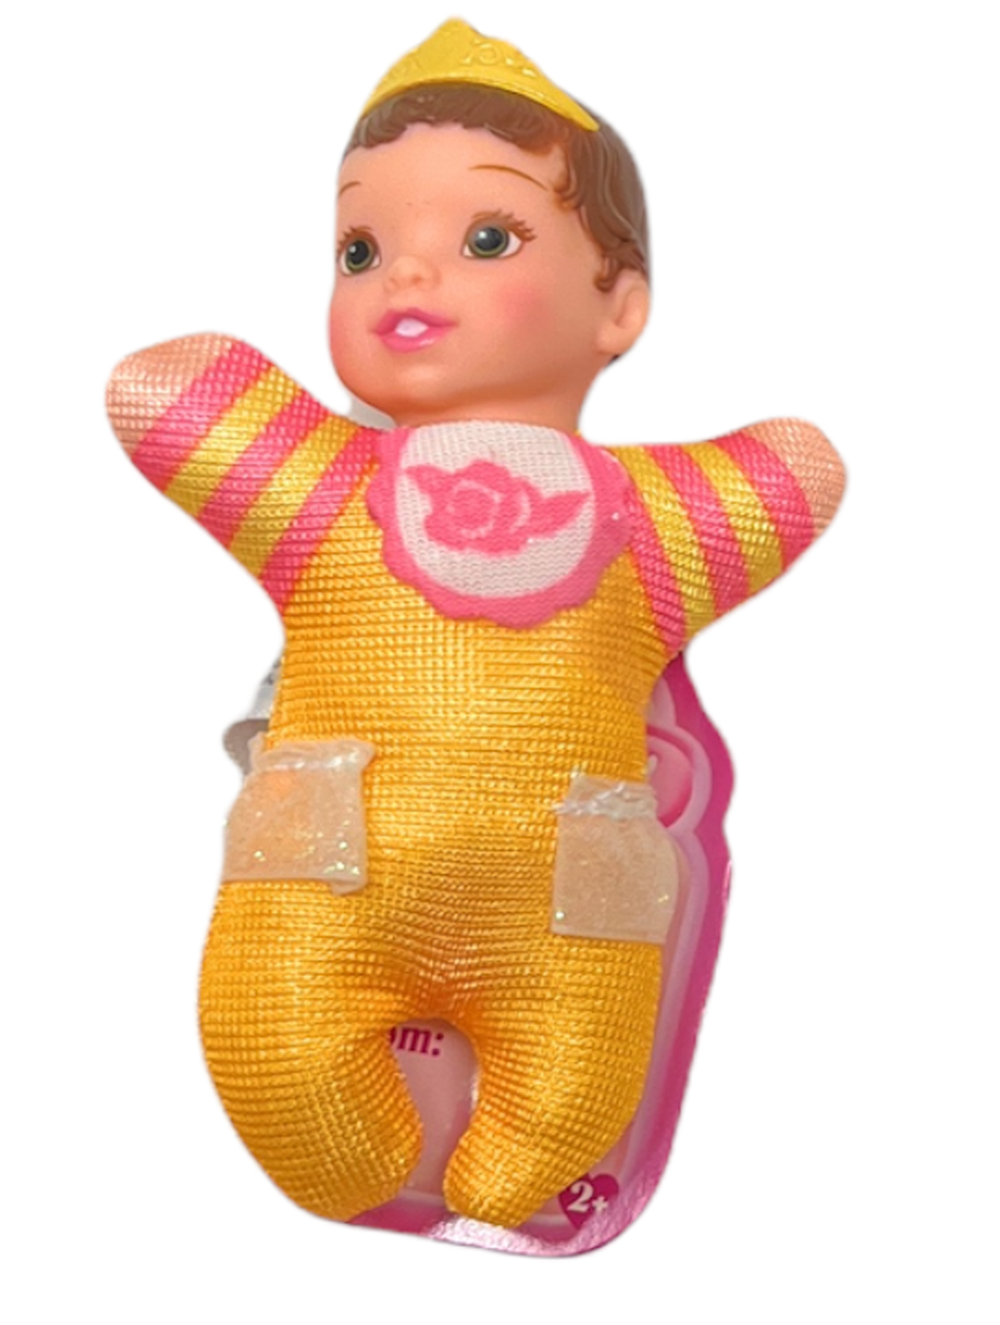 Jakks Pacific Disney Princess Mini Baby Infant Doll, 4-Inch (Belle)